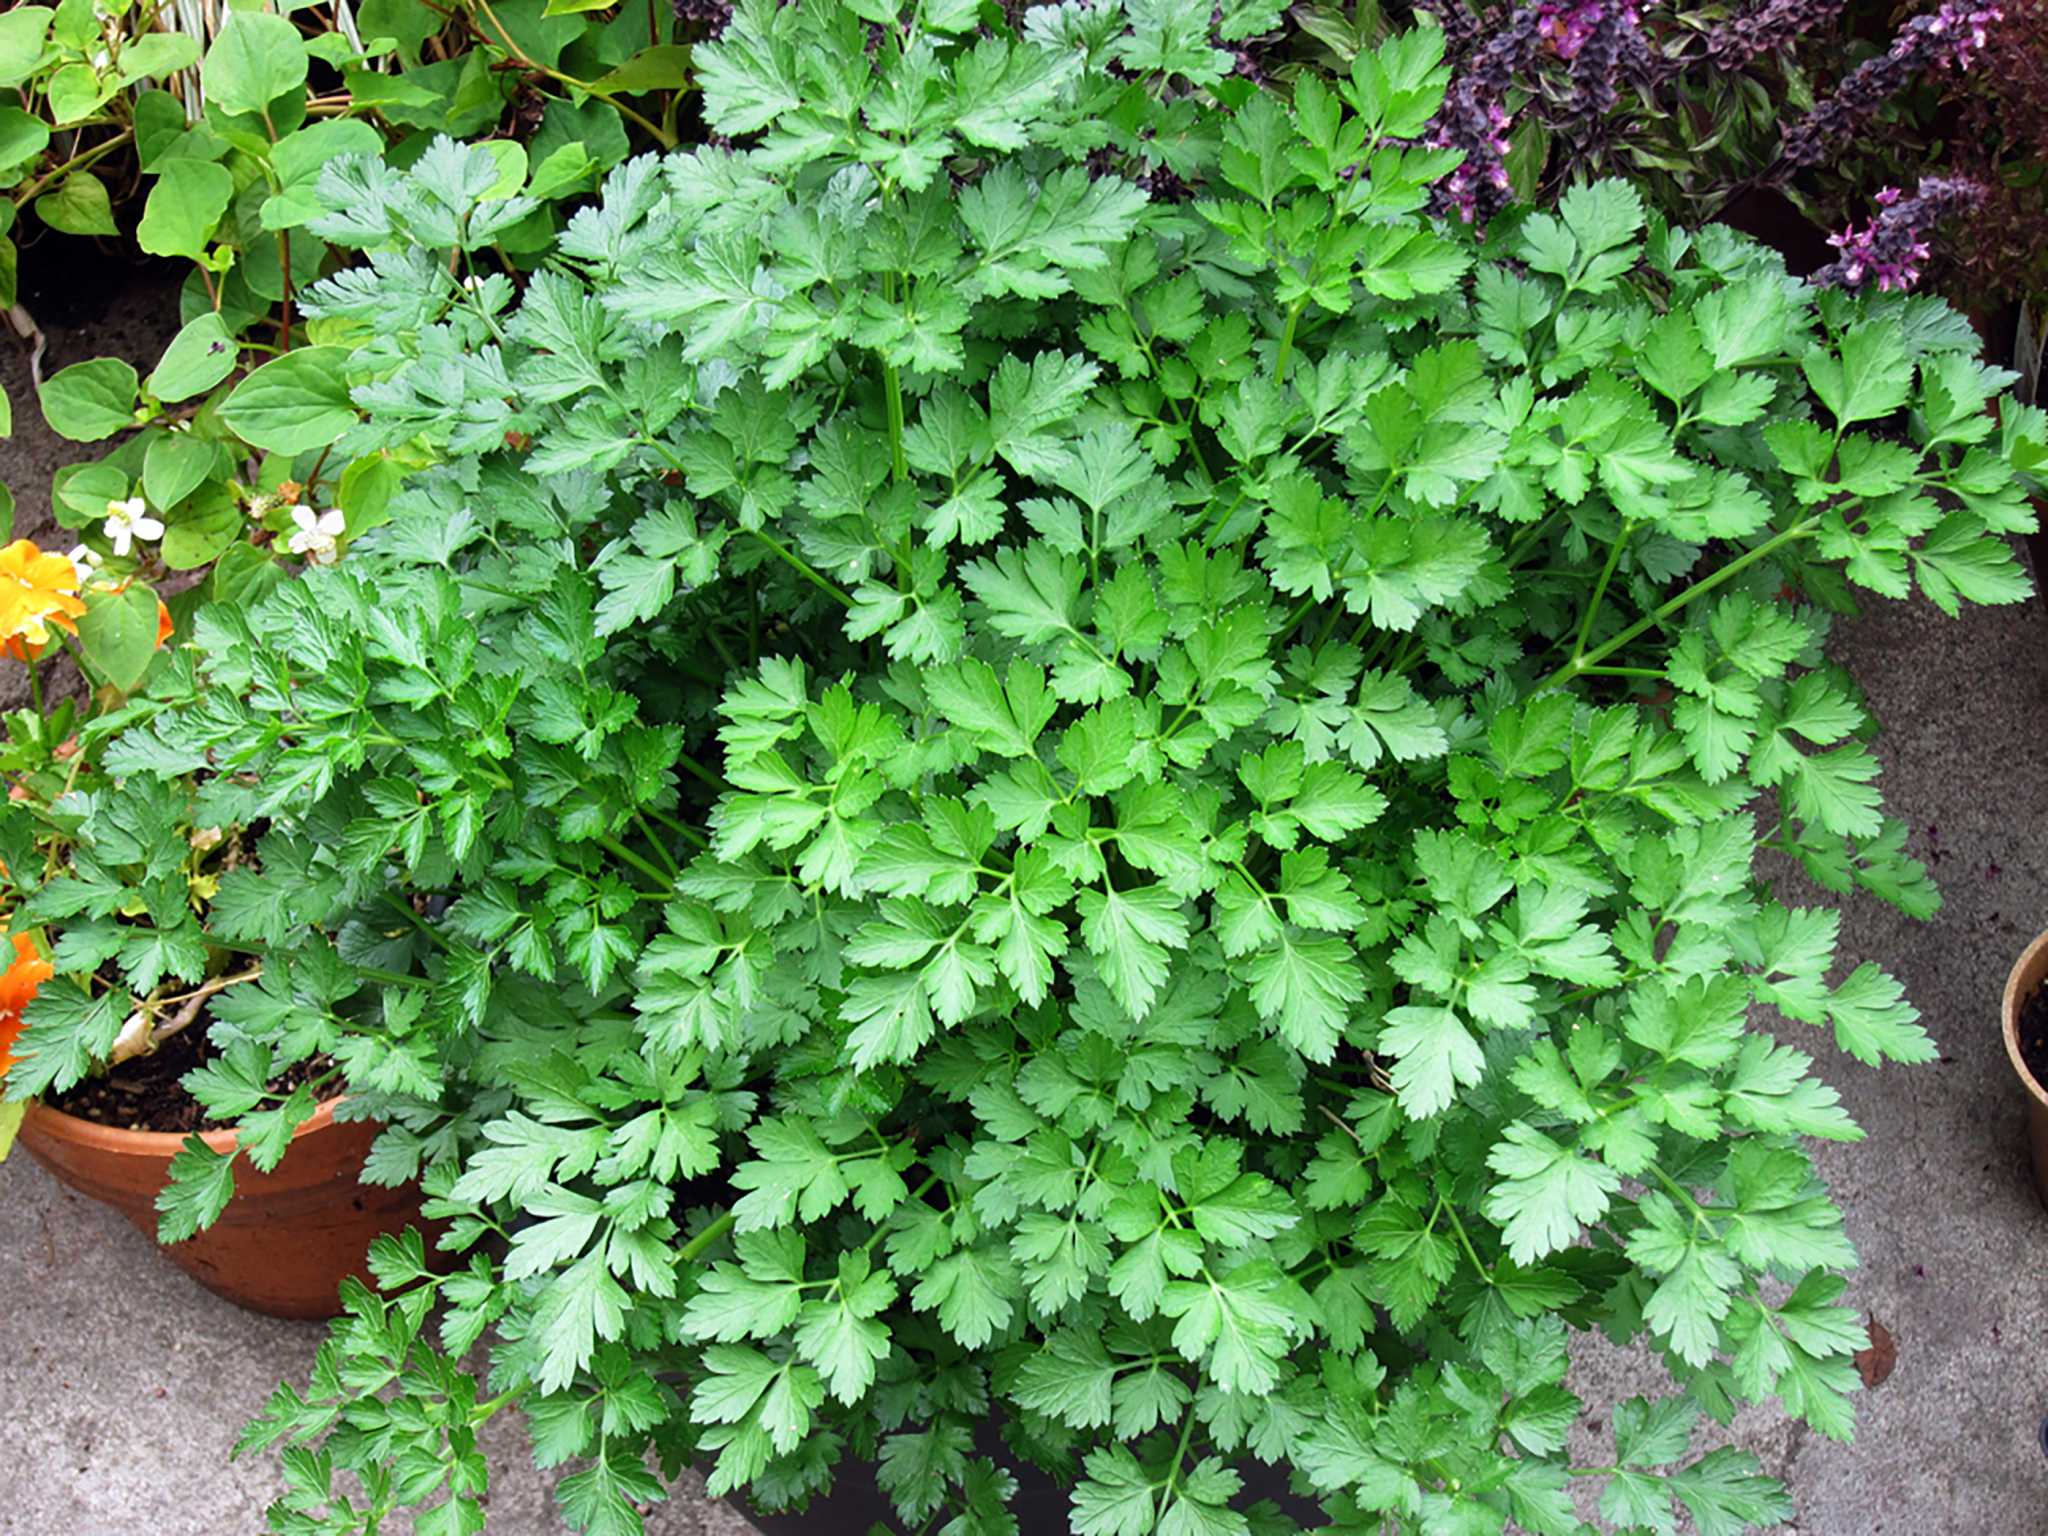 Grow cilantro and parsley in your Bay Area garden